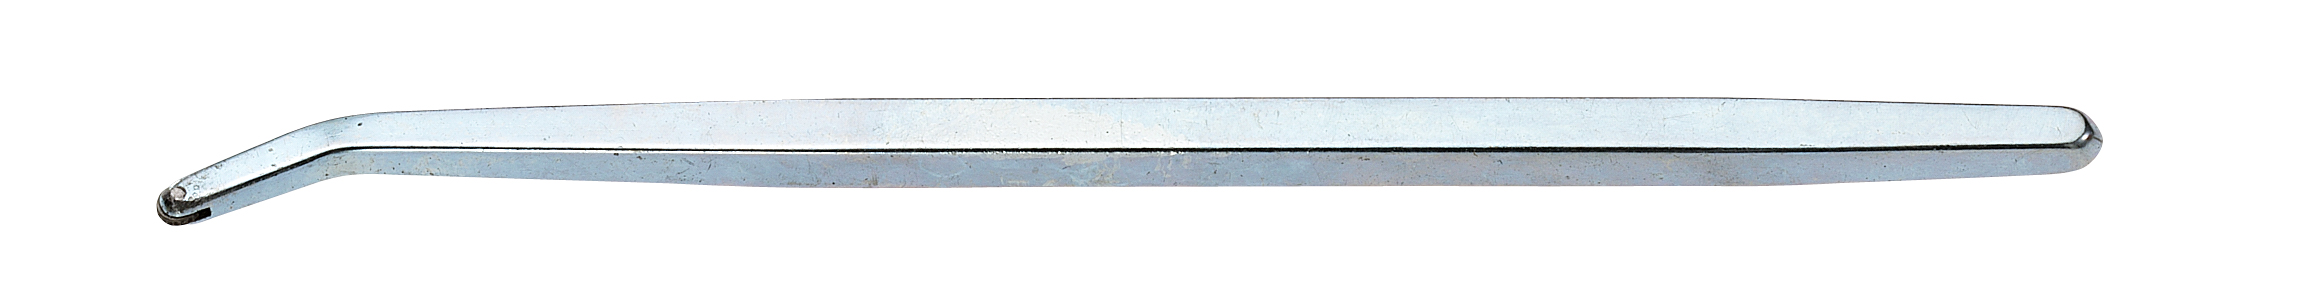 Millgrain tool Type 1 fine